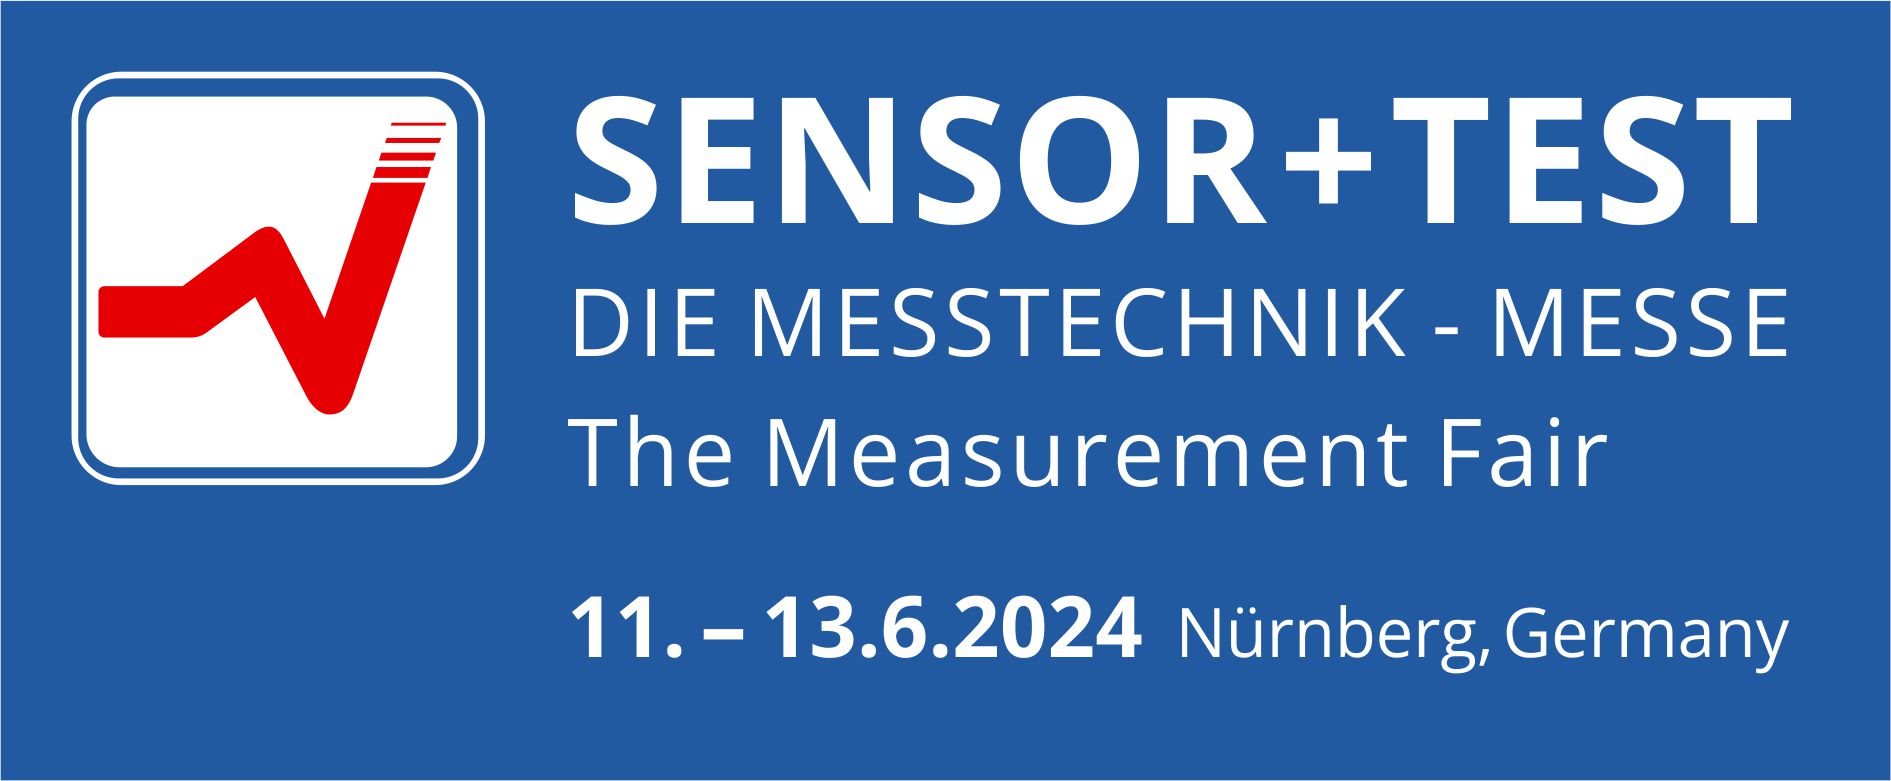 Sensor-Test logo; The Measurement Fair; June 11-13 in Nuremberg, Germany